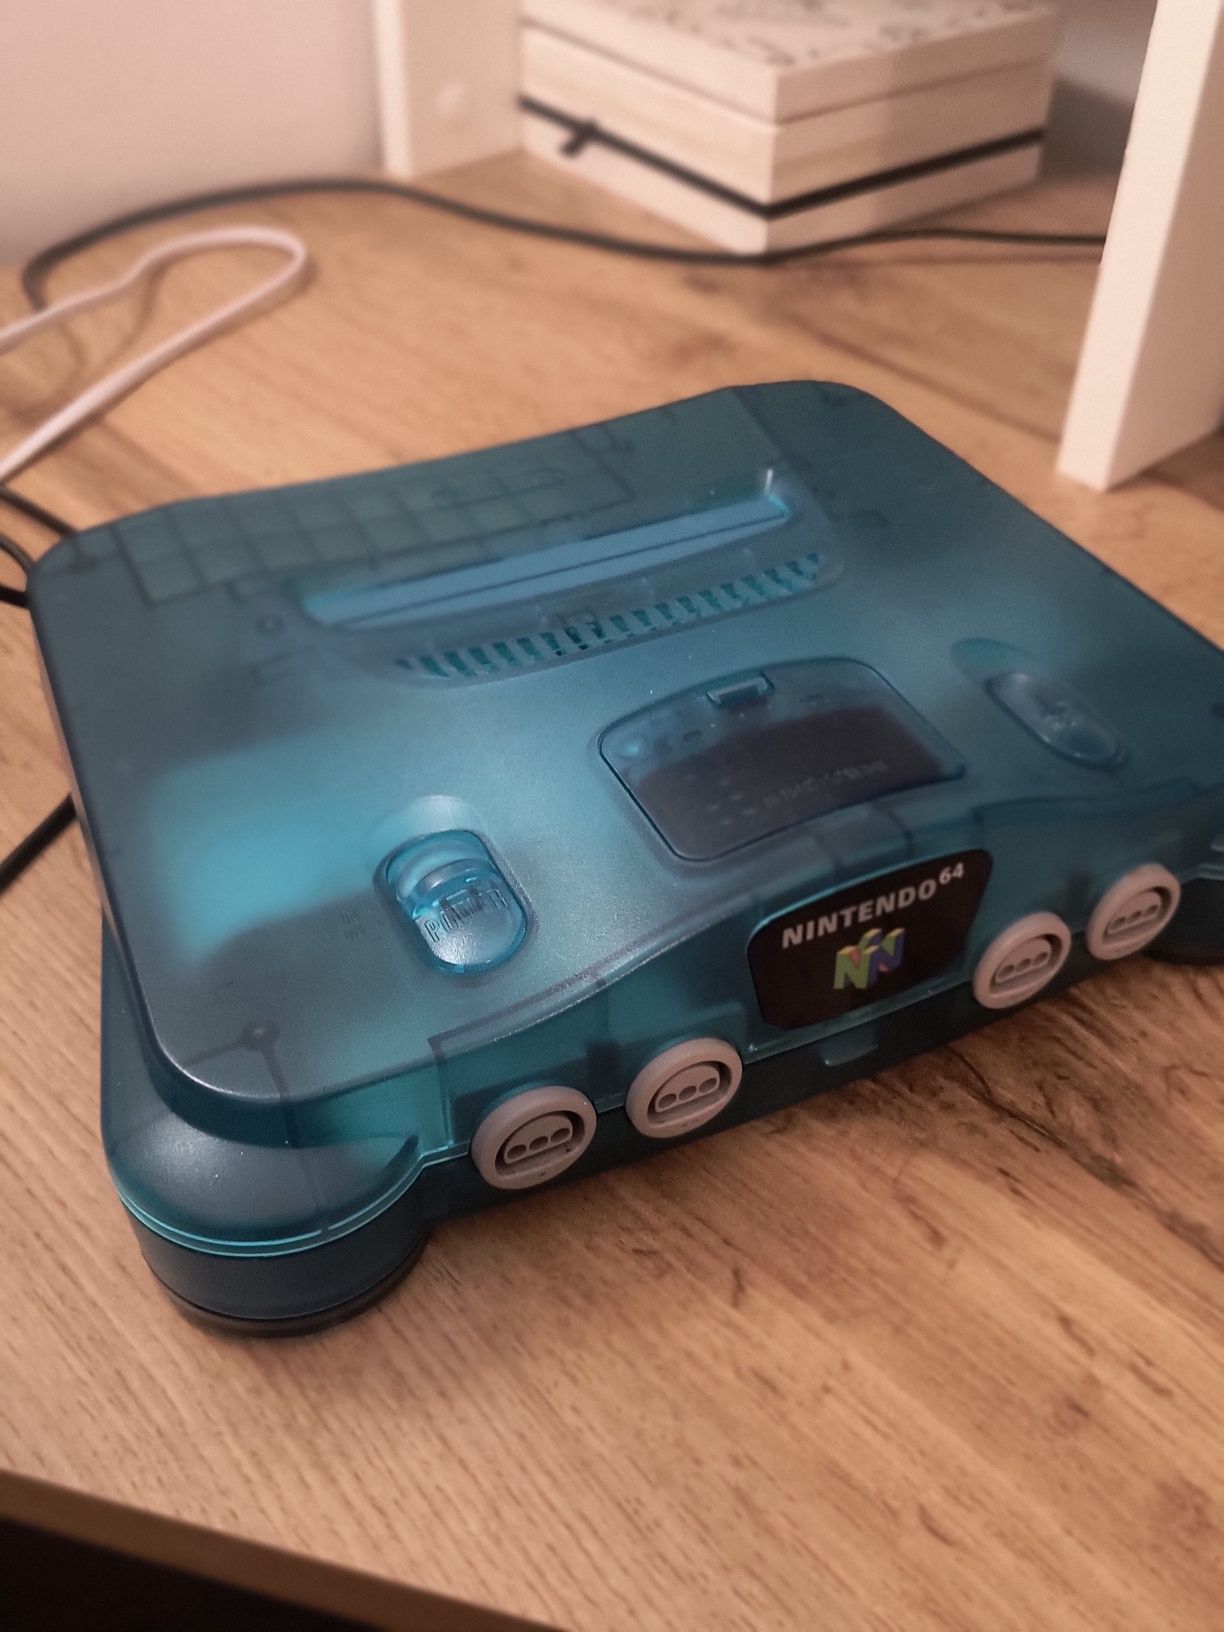 Nintendo 64 hdmi mod